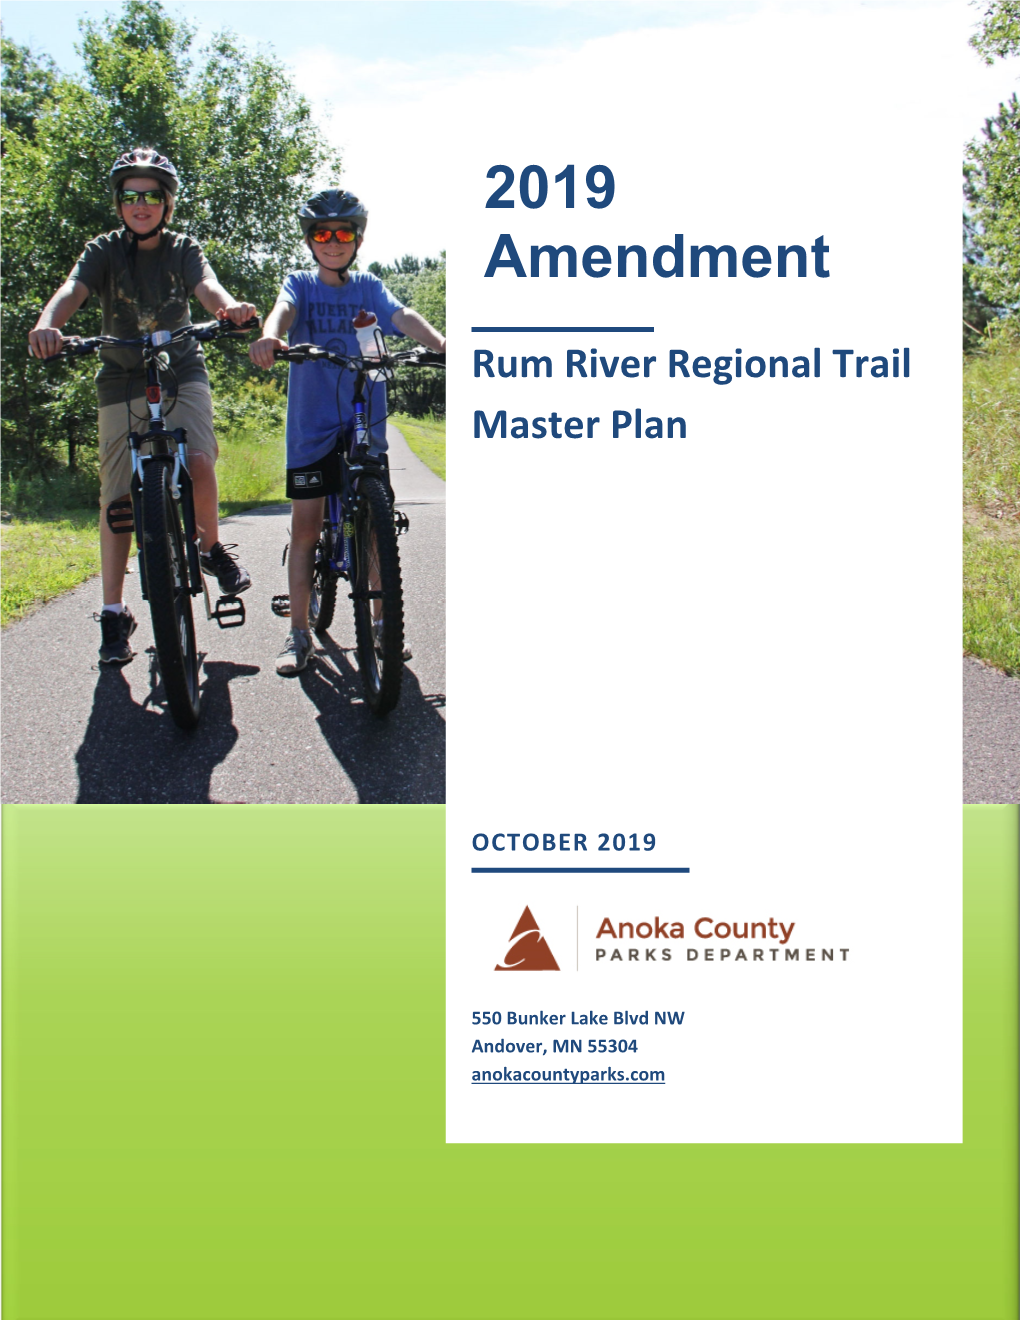 Rum River Regional Trail Master Plan Amendment